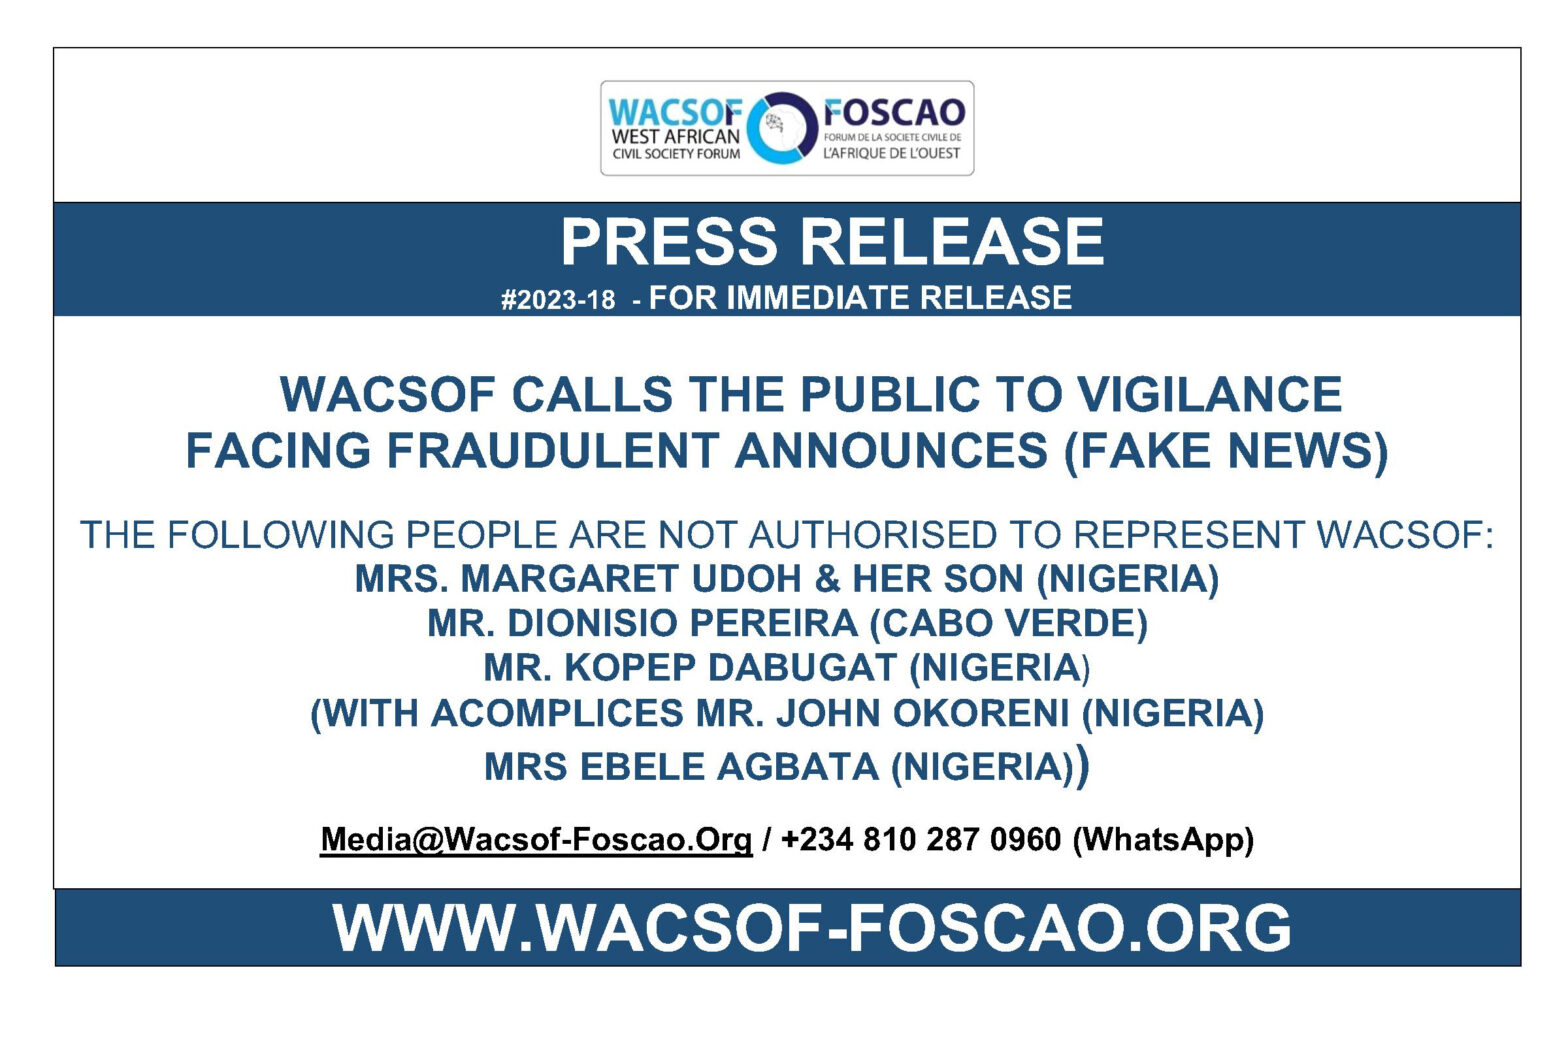 WACSOF CALLS THE PUBLIC TO VIGILANCE FACING FRAUDULENT ANOUNCES (FAKE NEWS) 